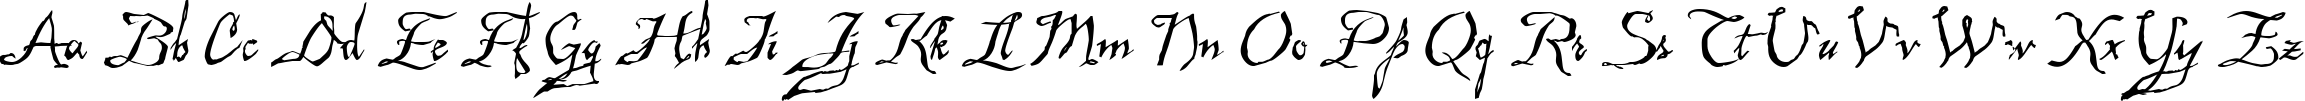 Пример написания английского алфавита шрифтом Malagua